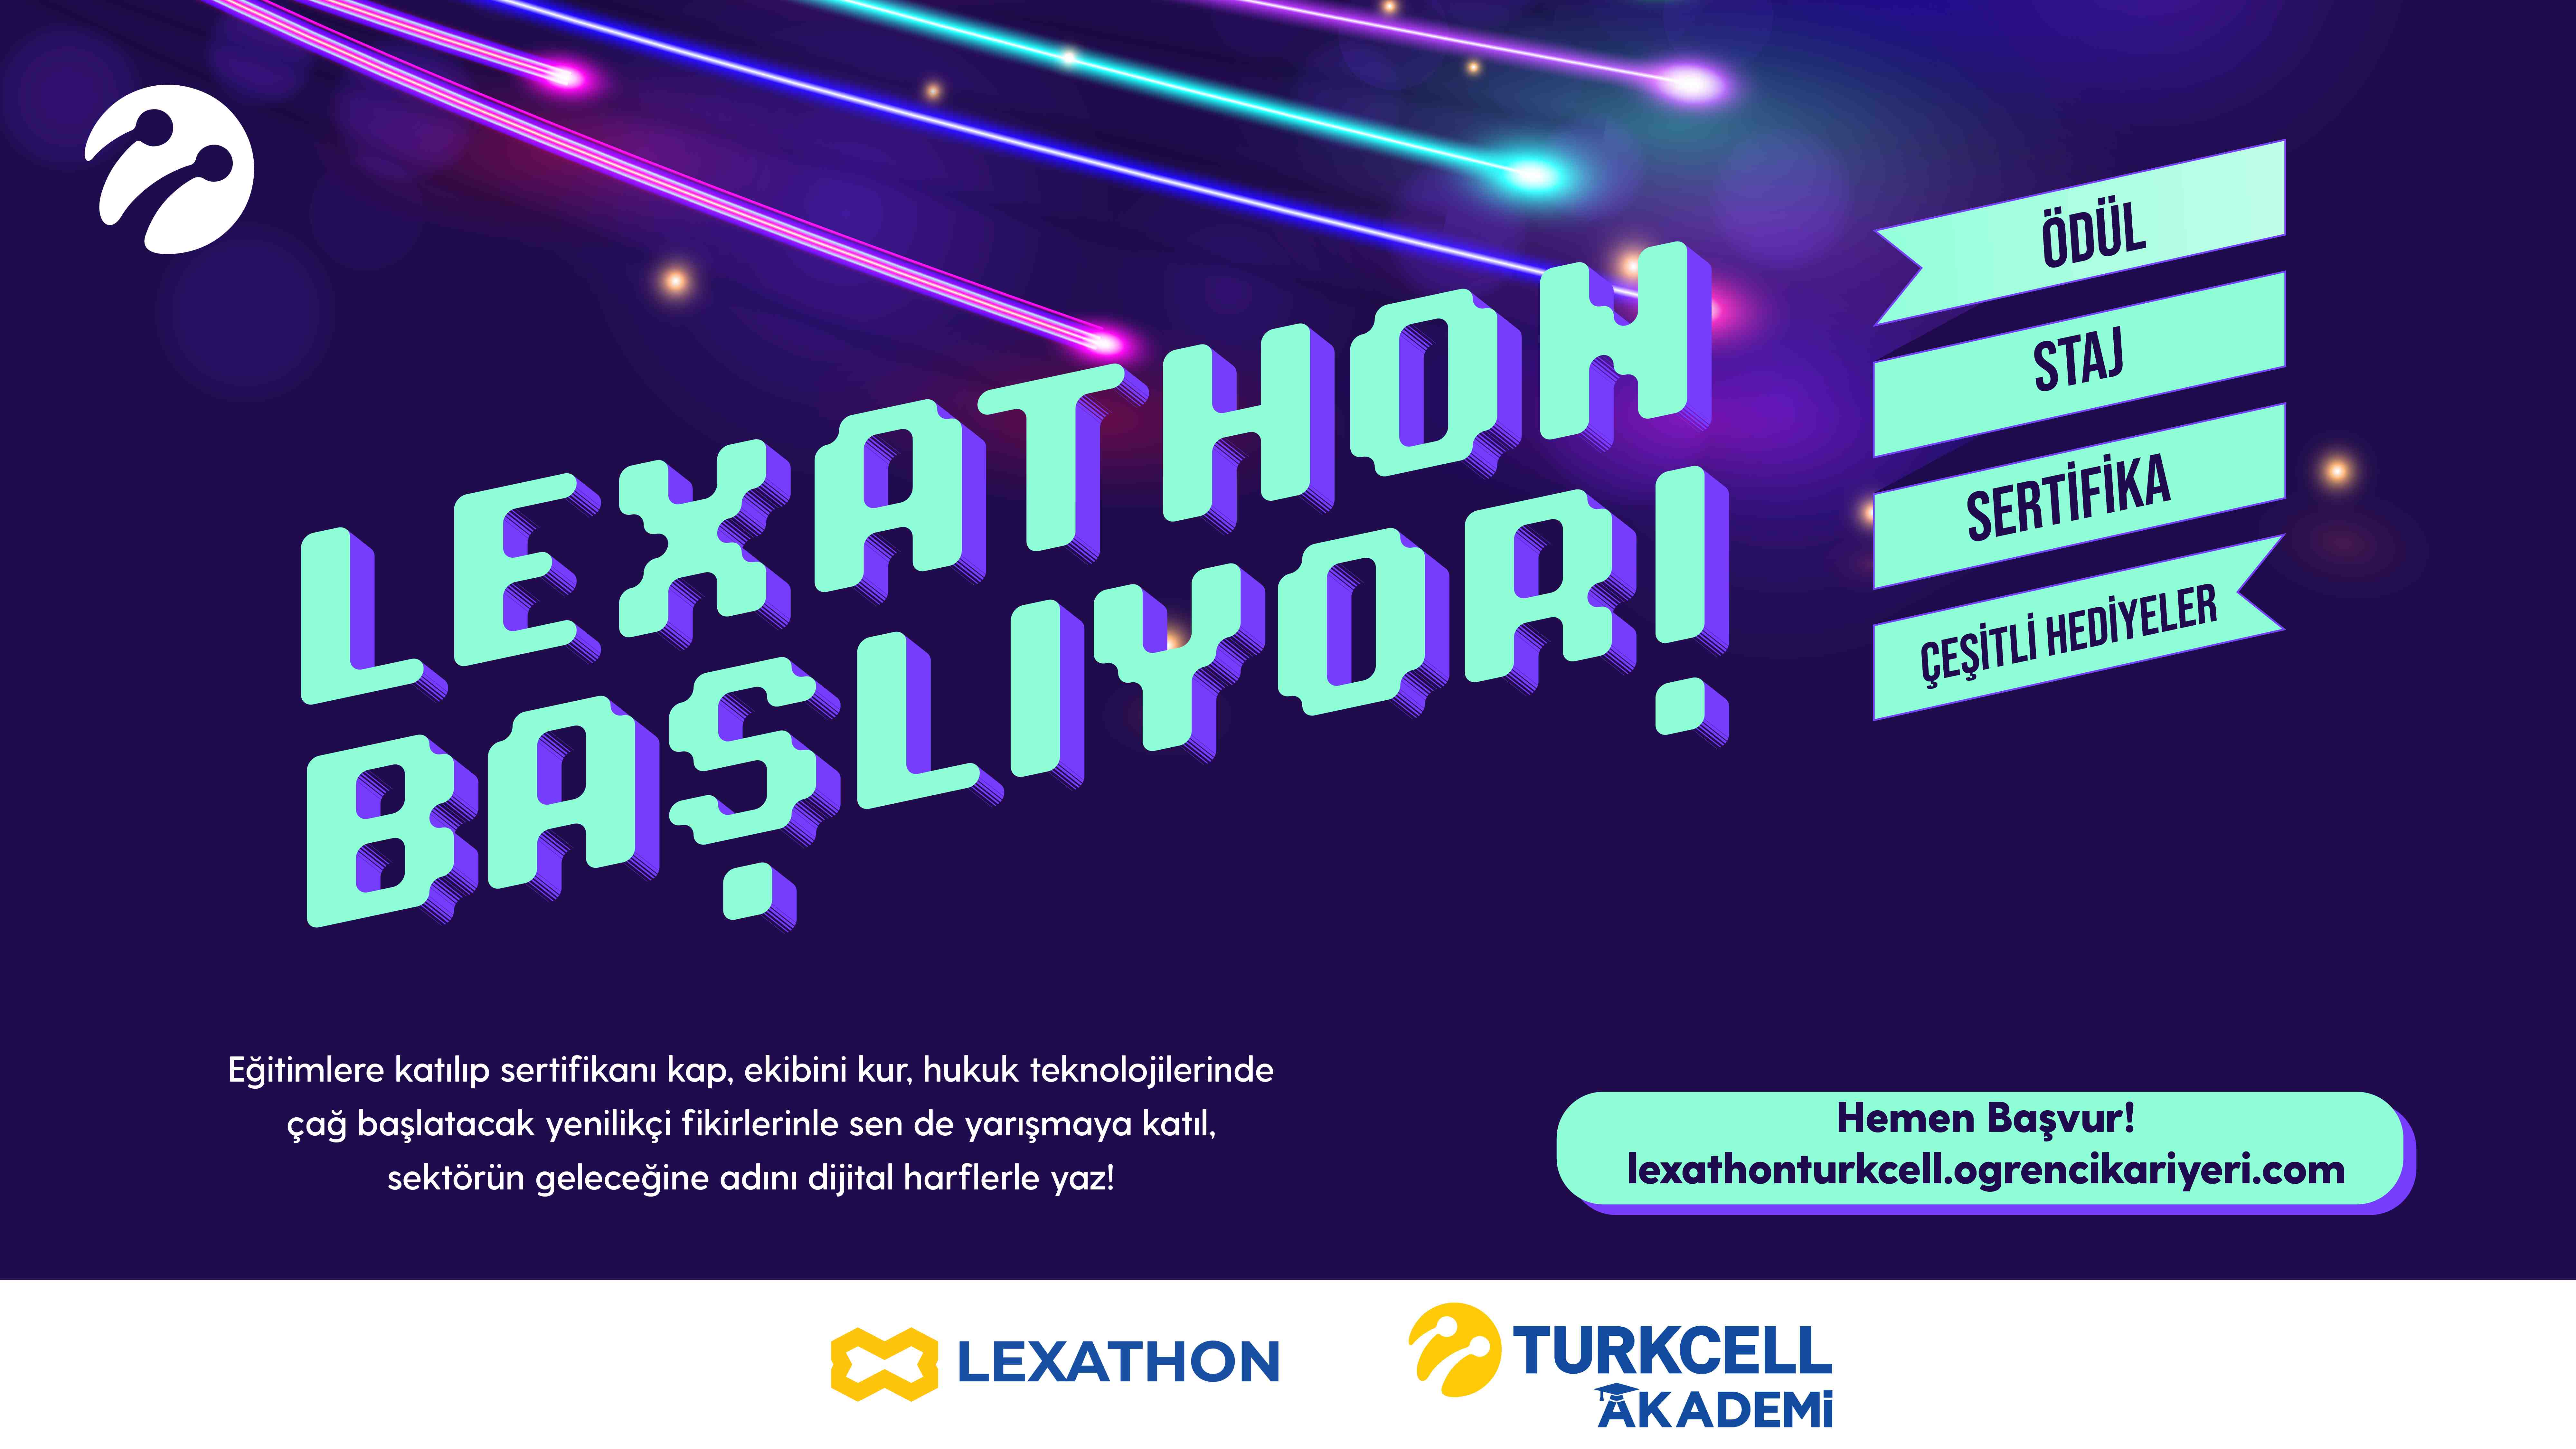 Turkcell Lexathon Başlıyor!